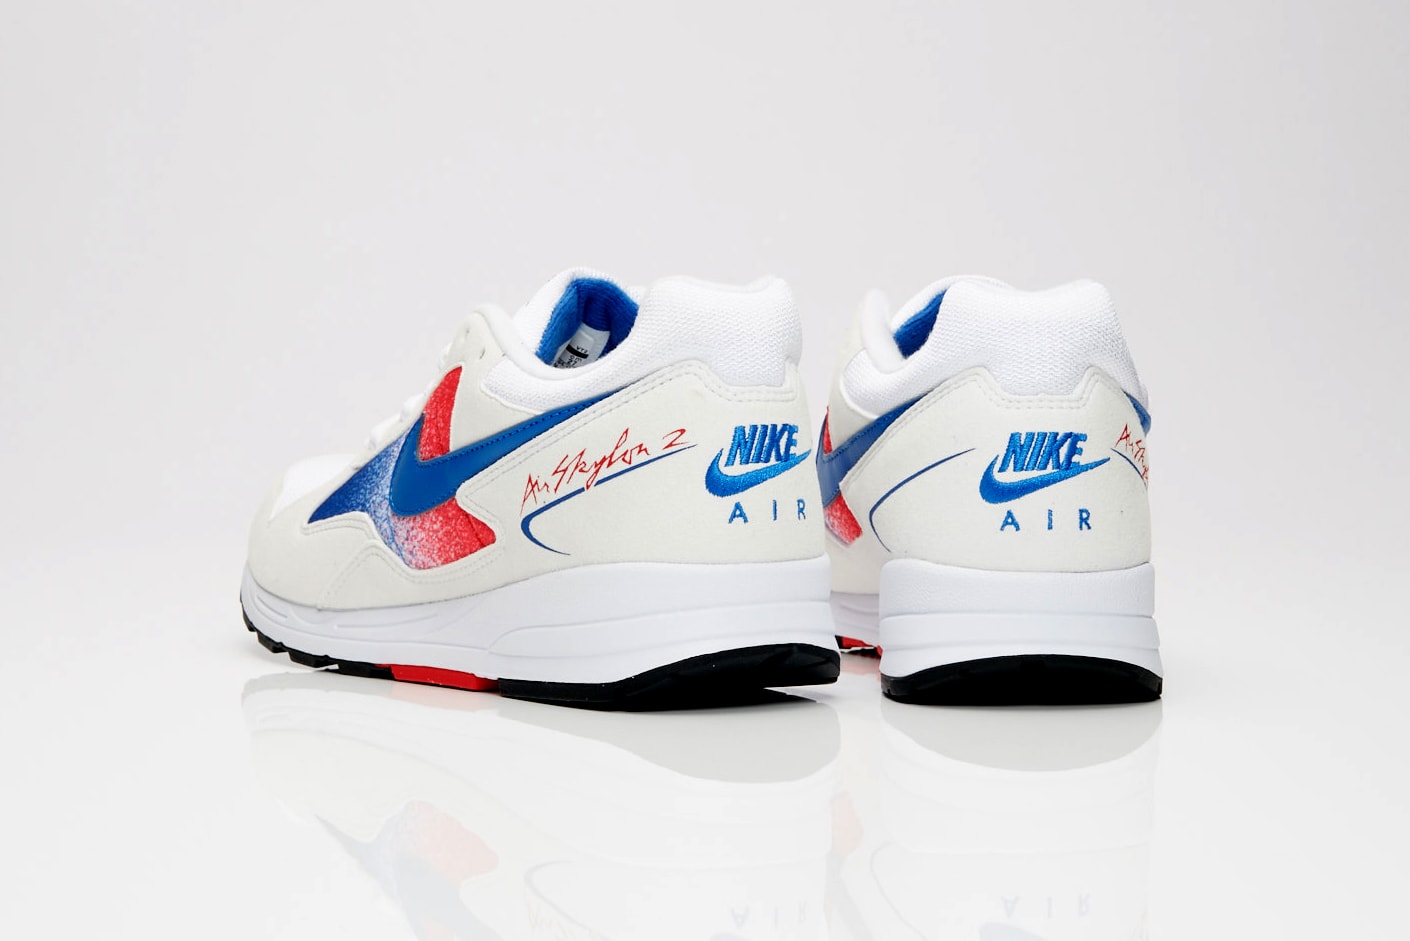 Nike Air Skylon II white red blue colorway retro Release info price purchase sneaker footwear Game Royal University